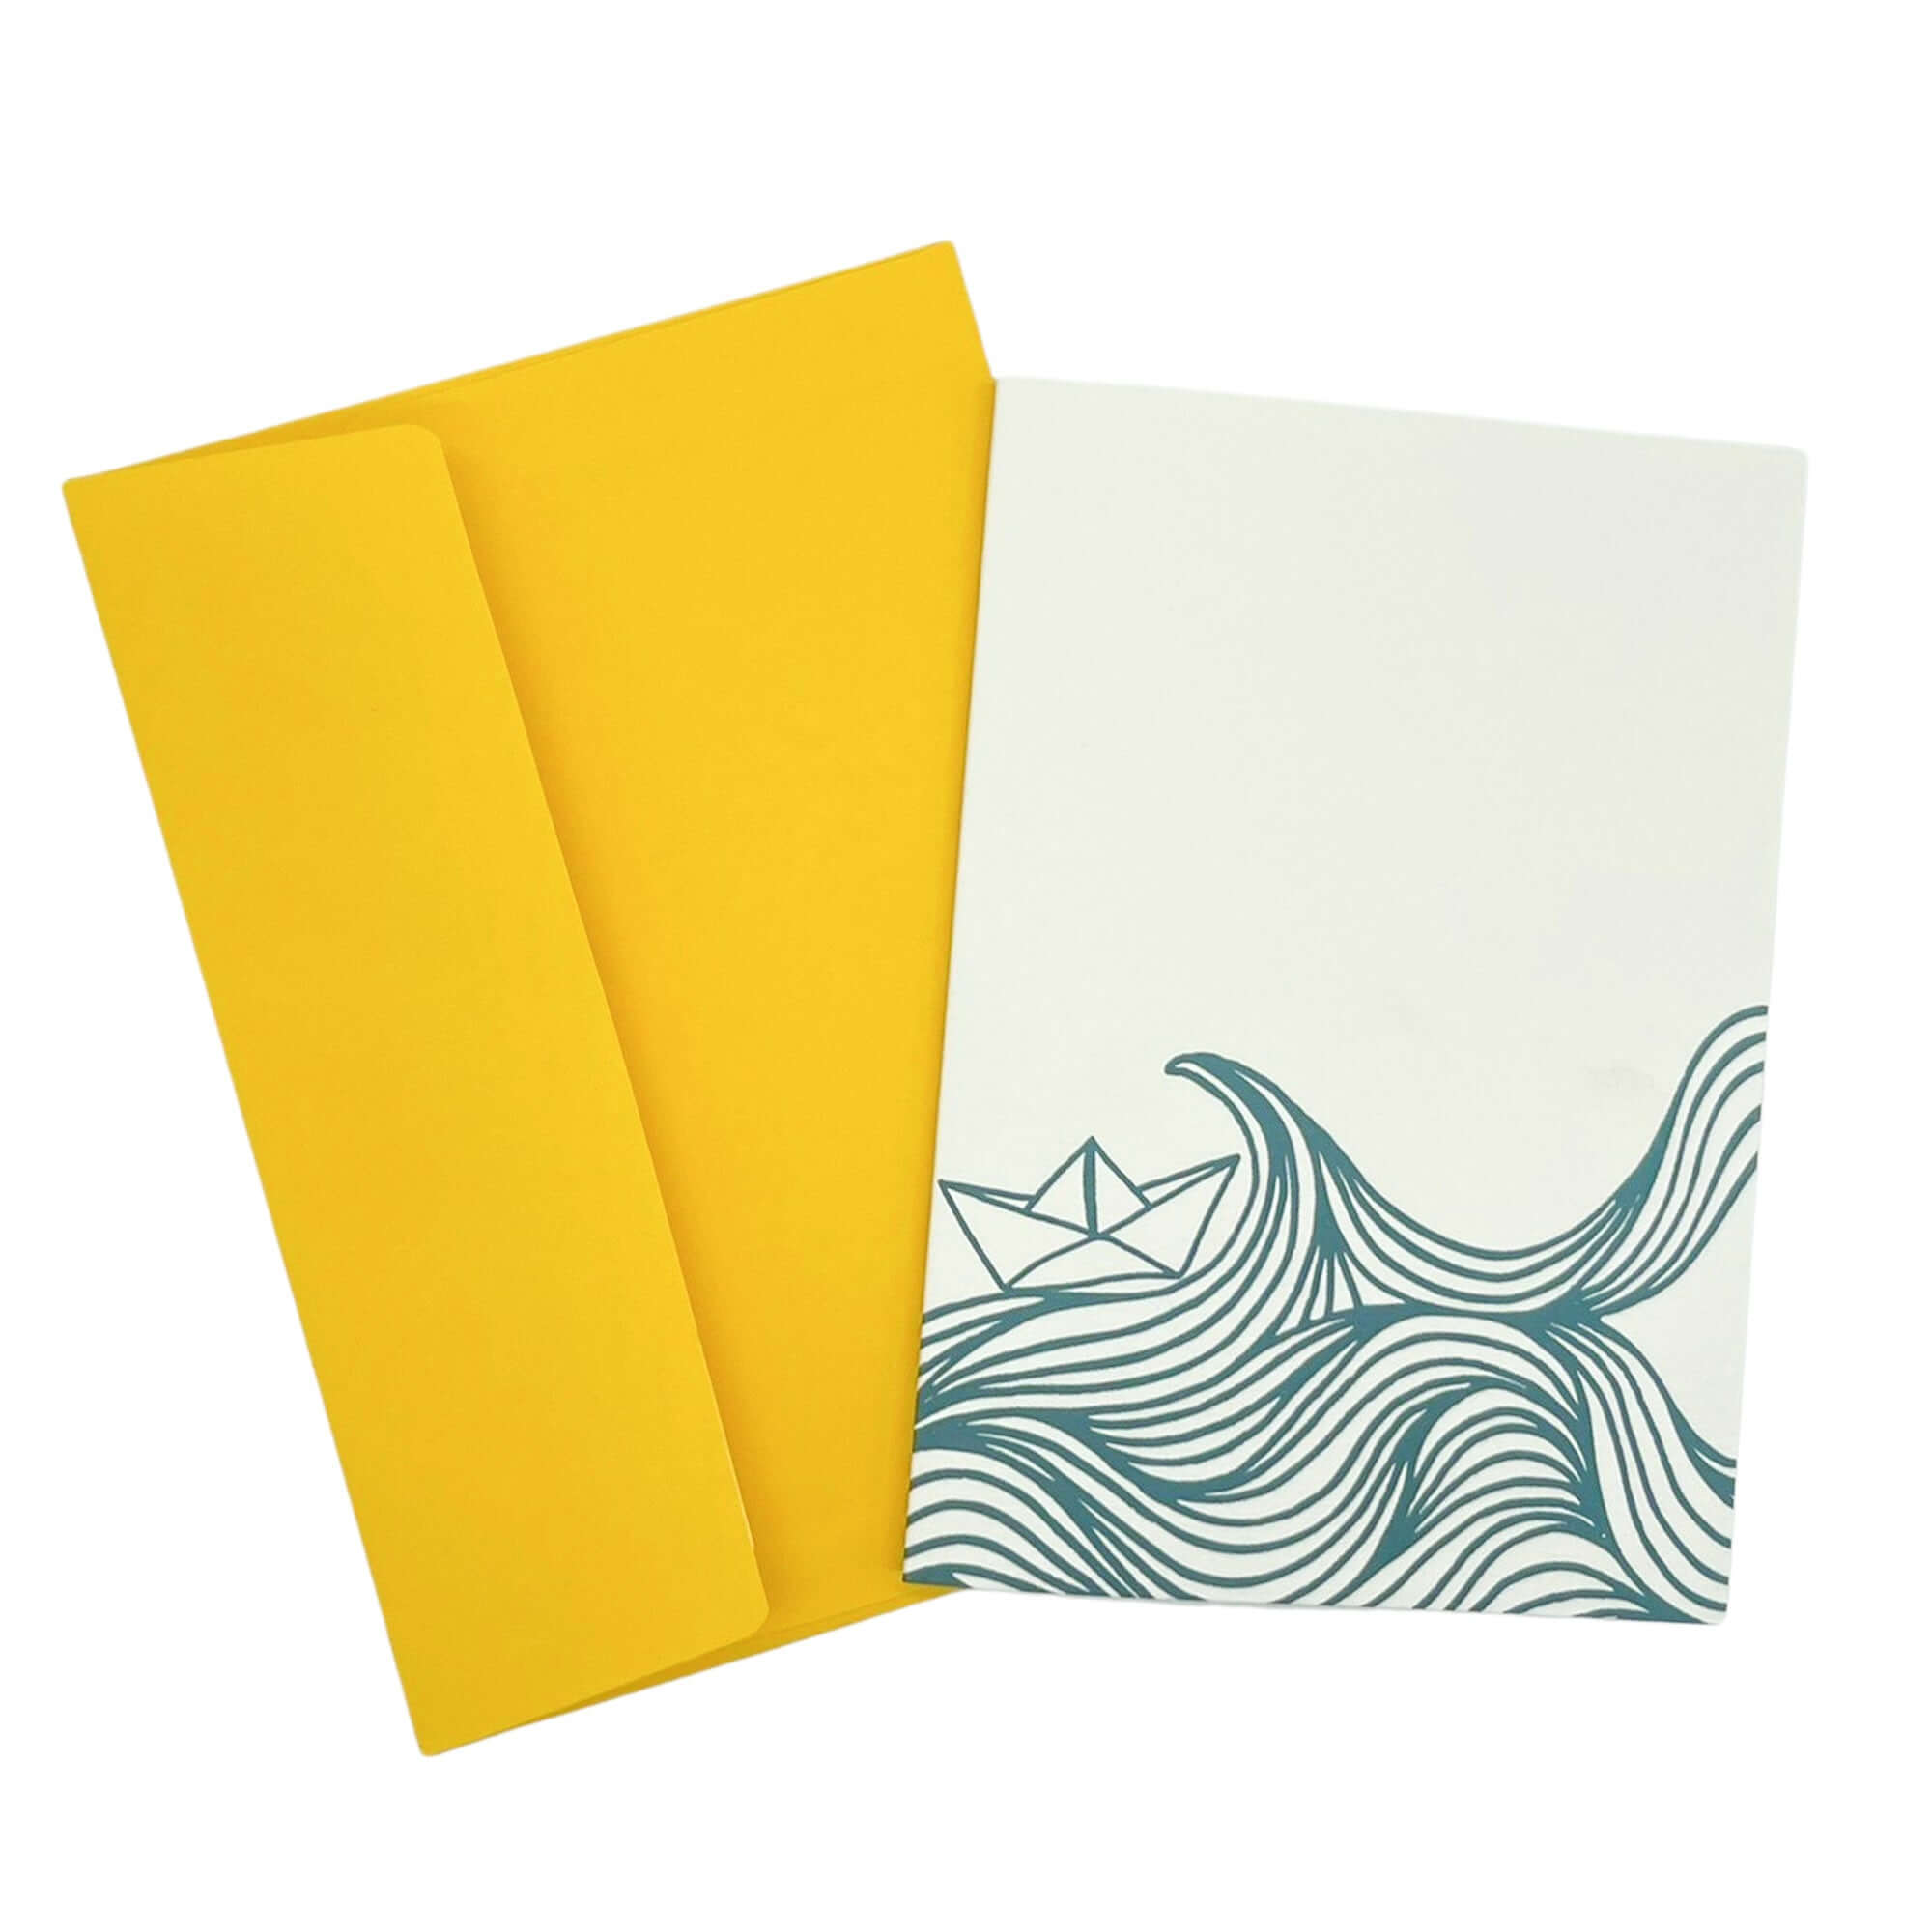 Paper Boat Greetings Card Greetings Card Mustard and Gray Ltd Shropshire UK